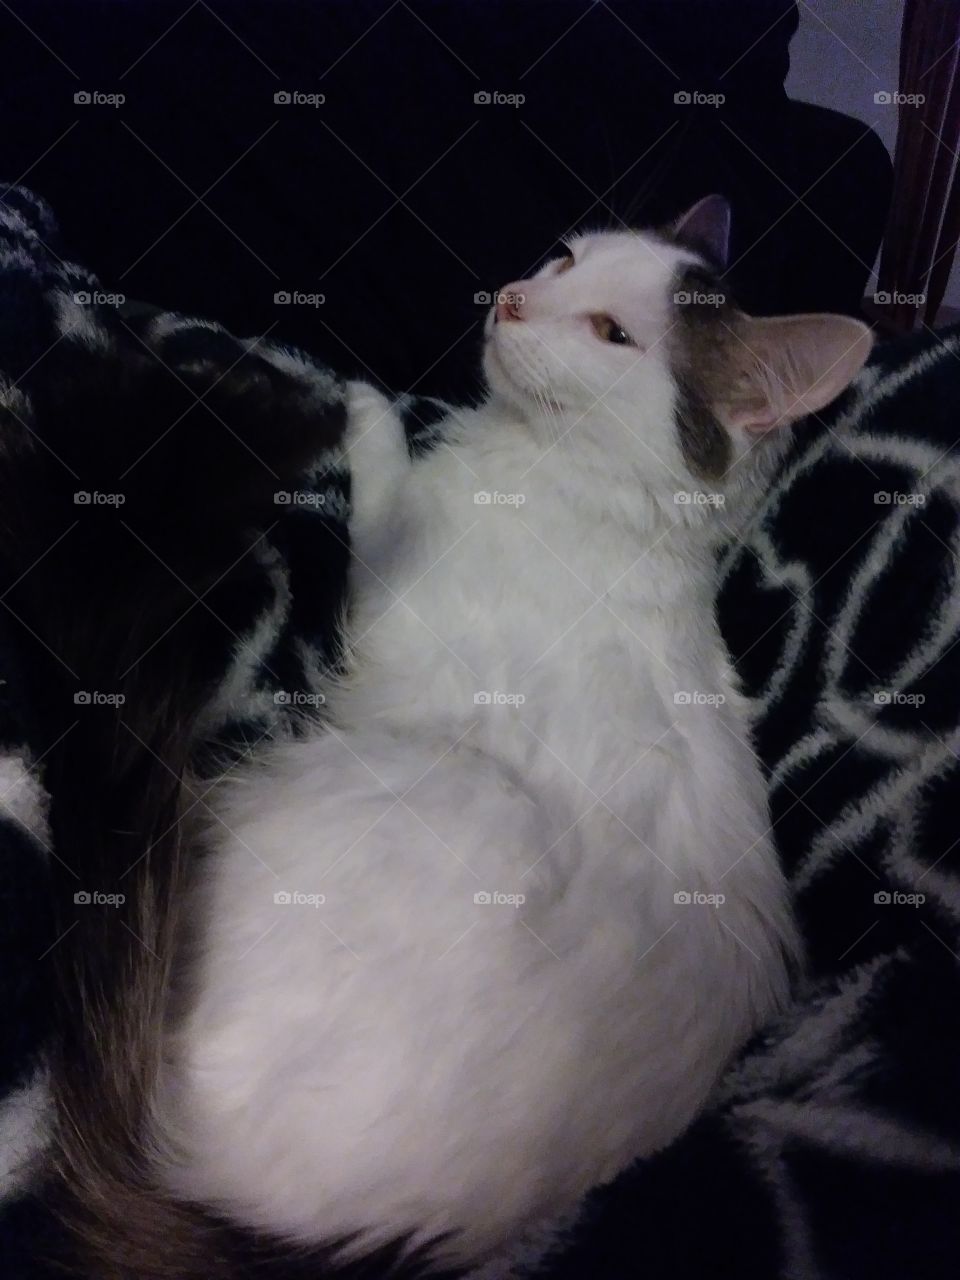 A white cat named Cloud enjoying a warm lap